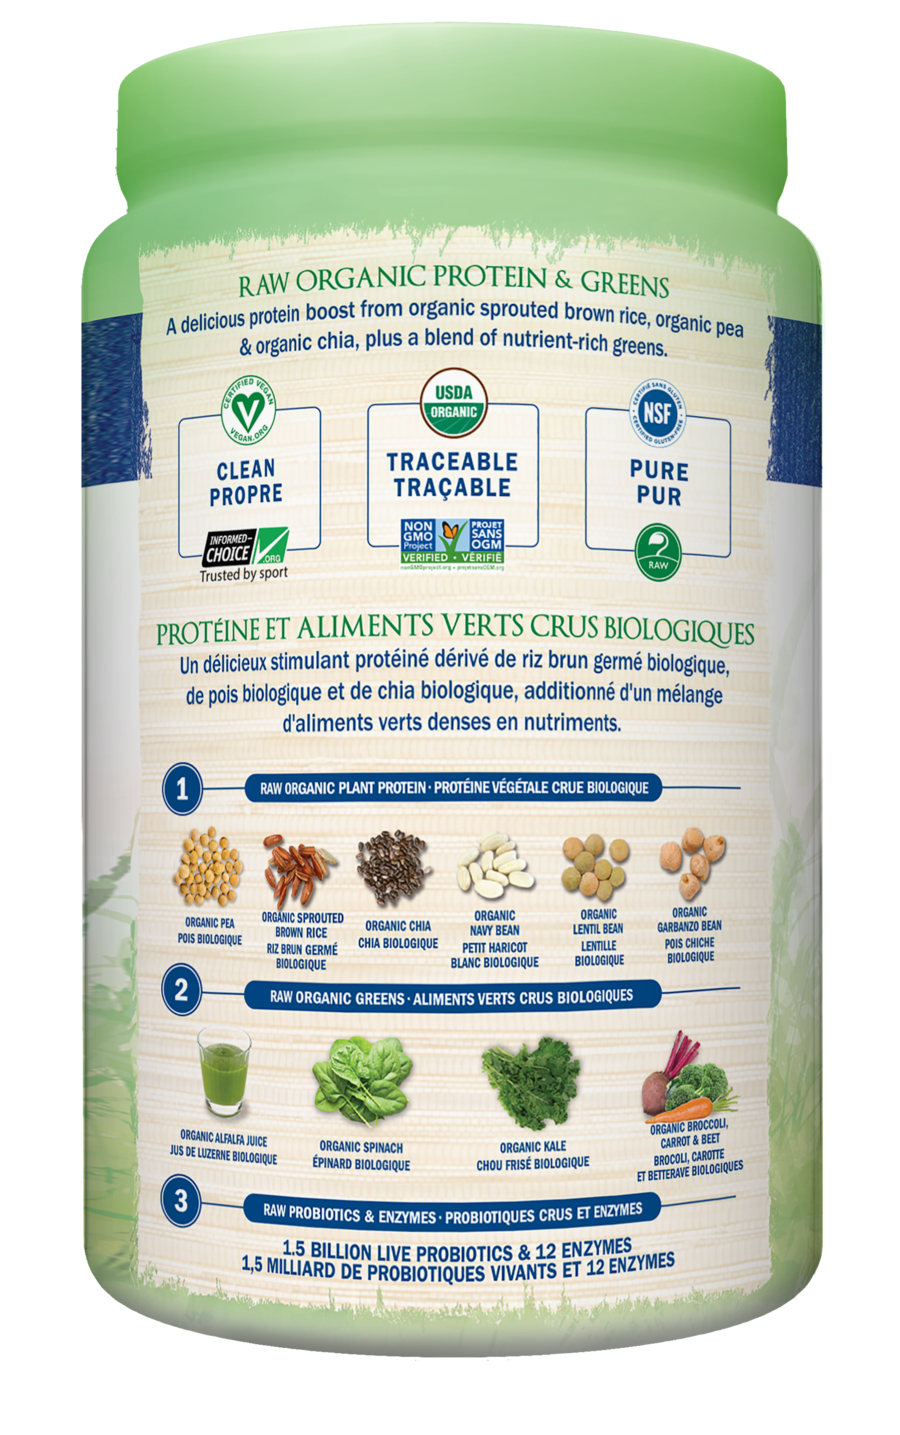 RAW Organic Protein & greens 550 g / Vanilla / g